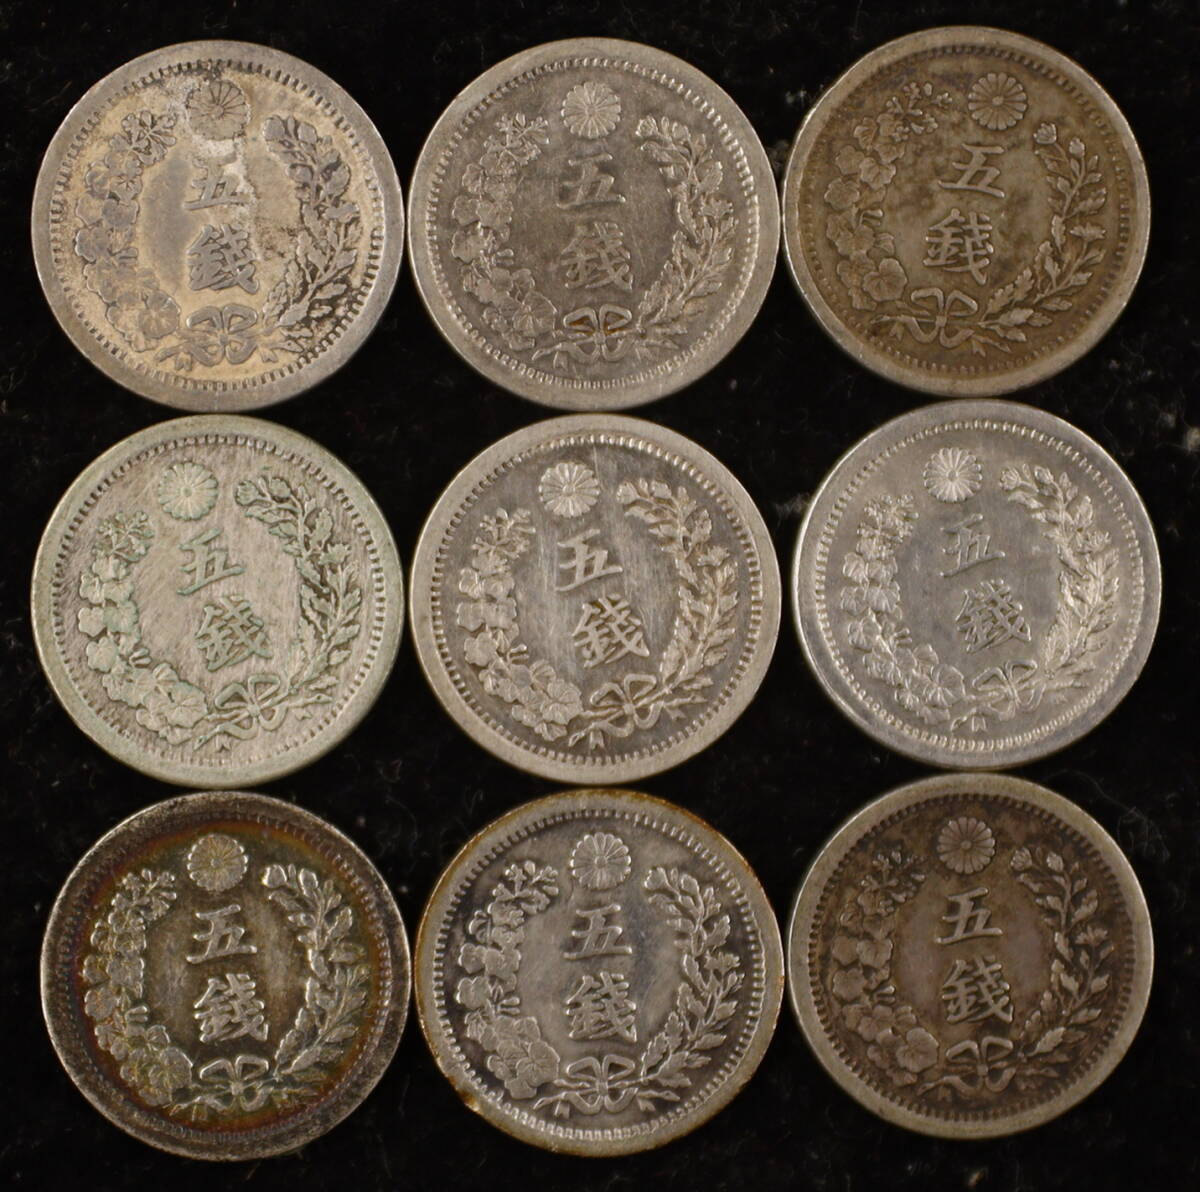  dragon 5 sen silver coin 20 sheets together . summarize 20 sen silver coin old coin coin coin 